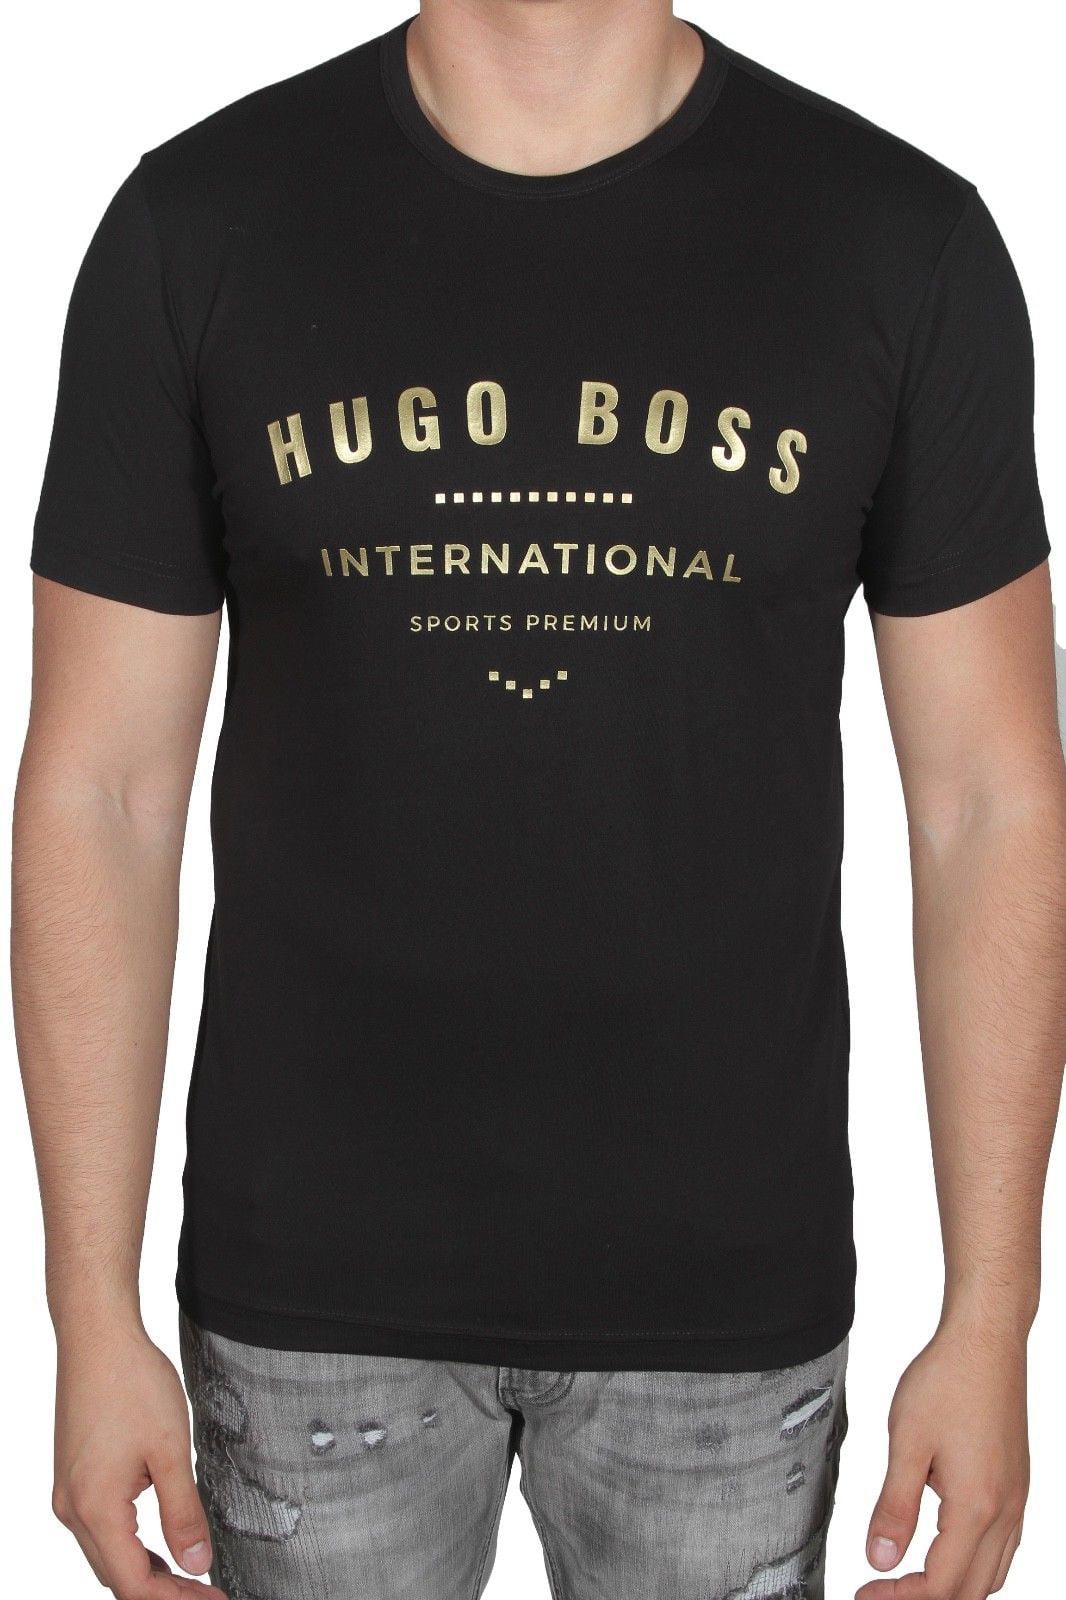 hugo boss international t shirt